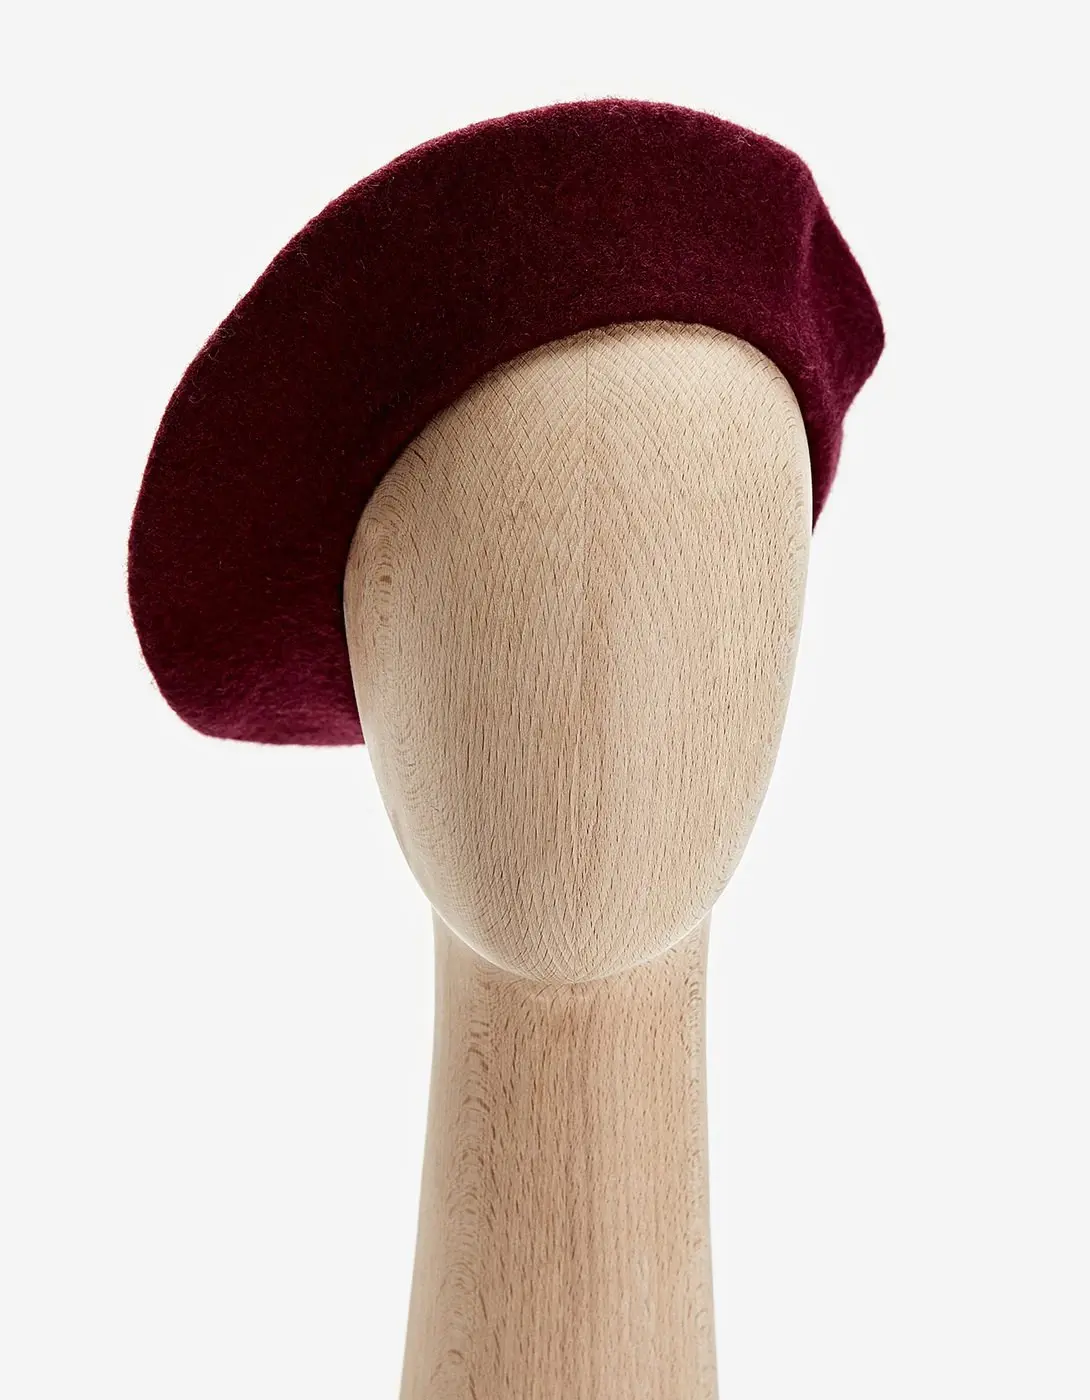 Aksesoris - topi baret. (Sumber foto: stradivarius.com)